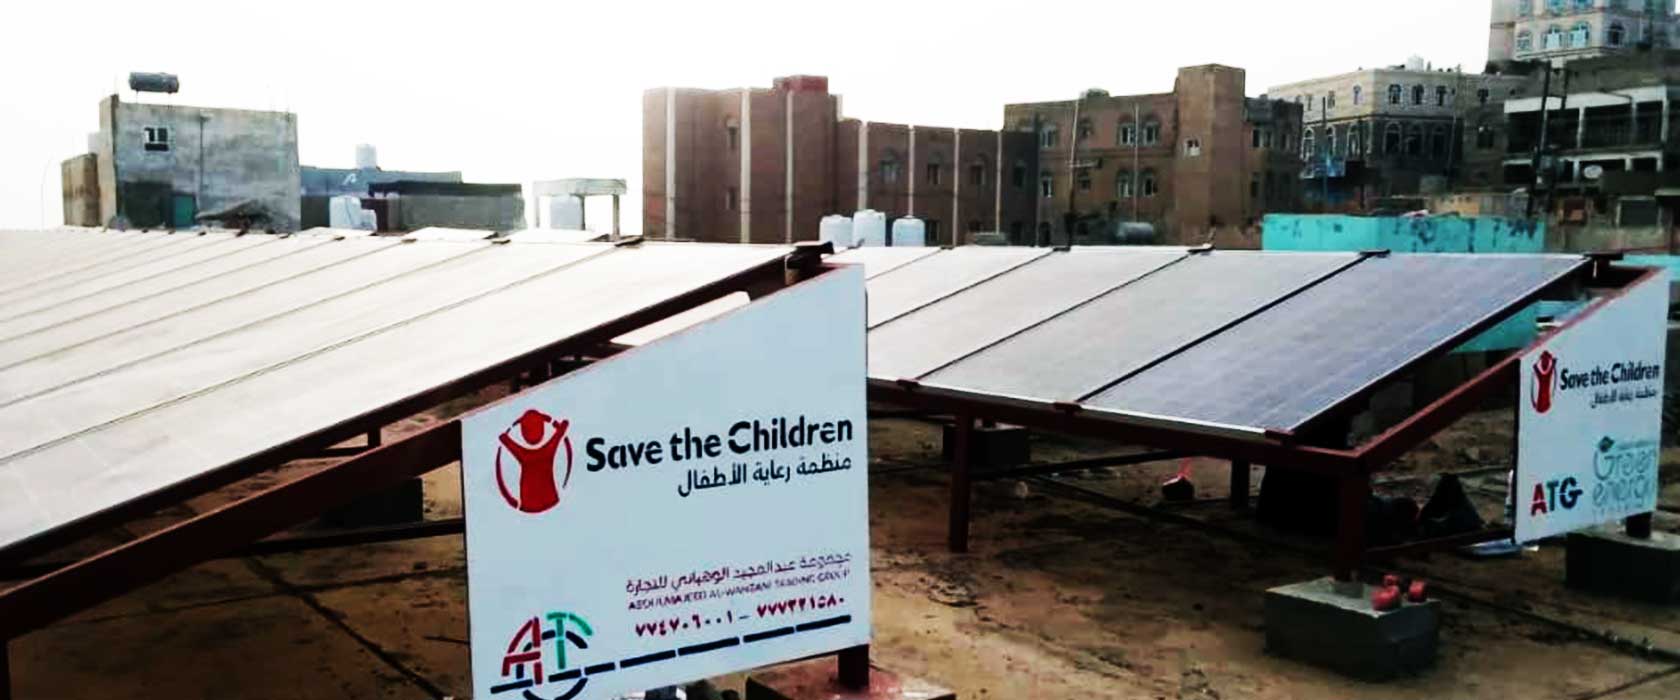 Save Children Org. Project - AL-Gmuhoury Hospital - Haja